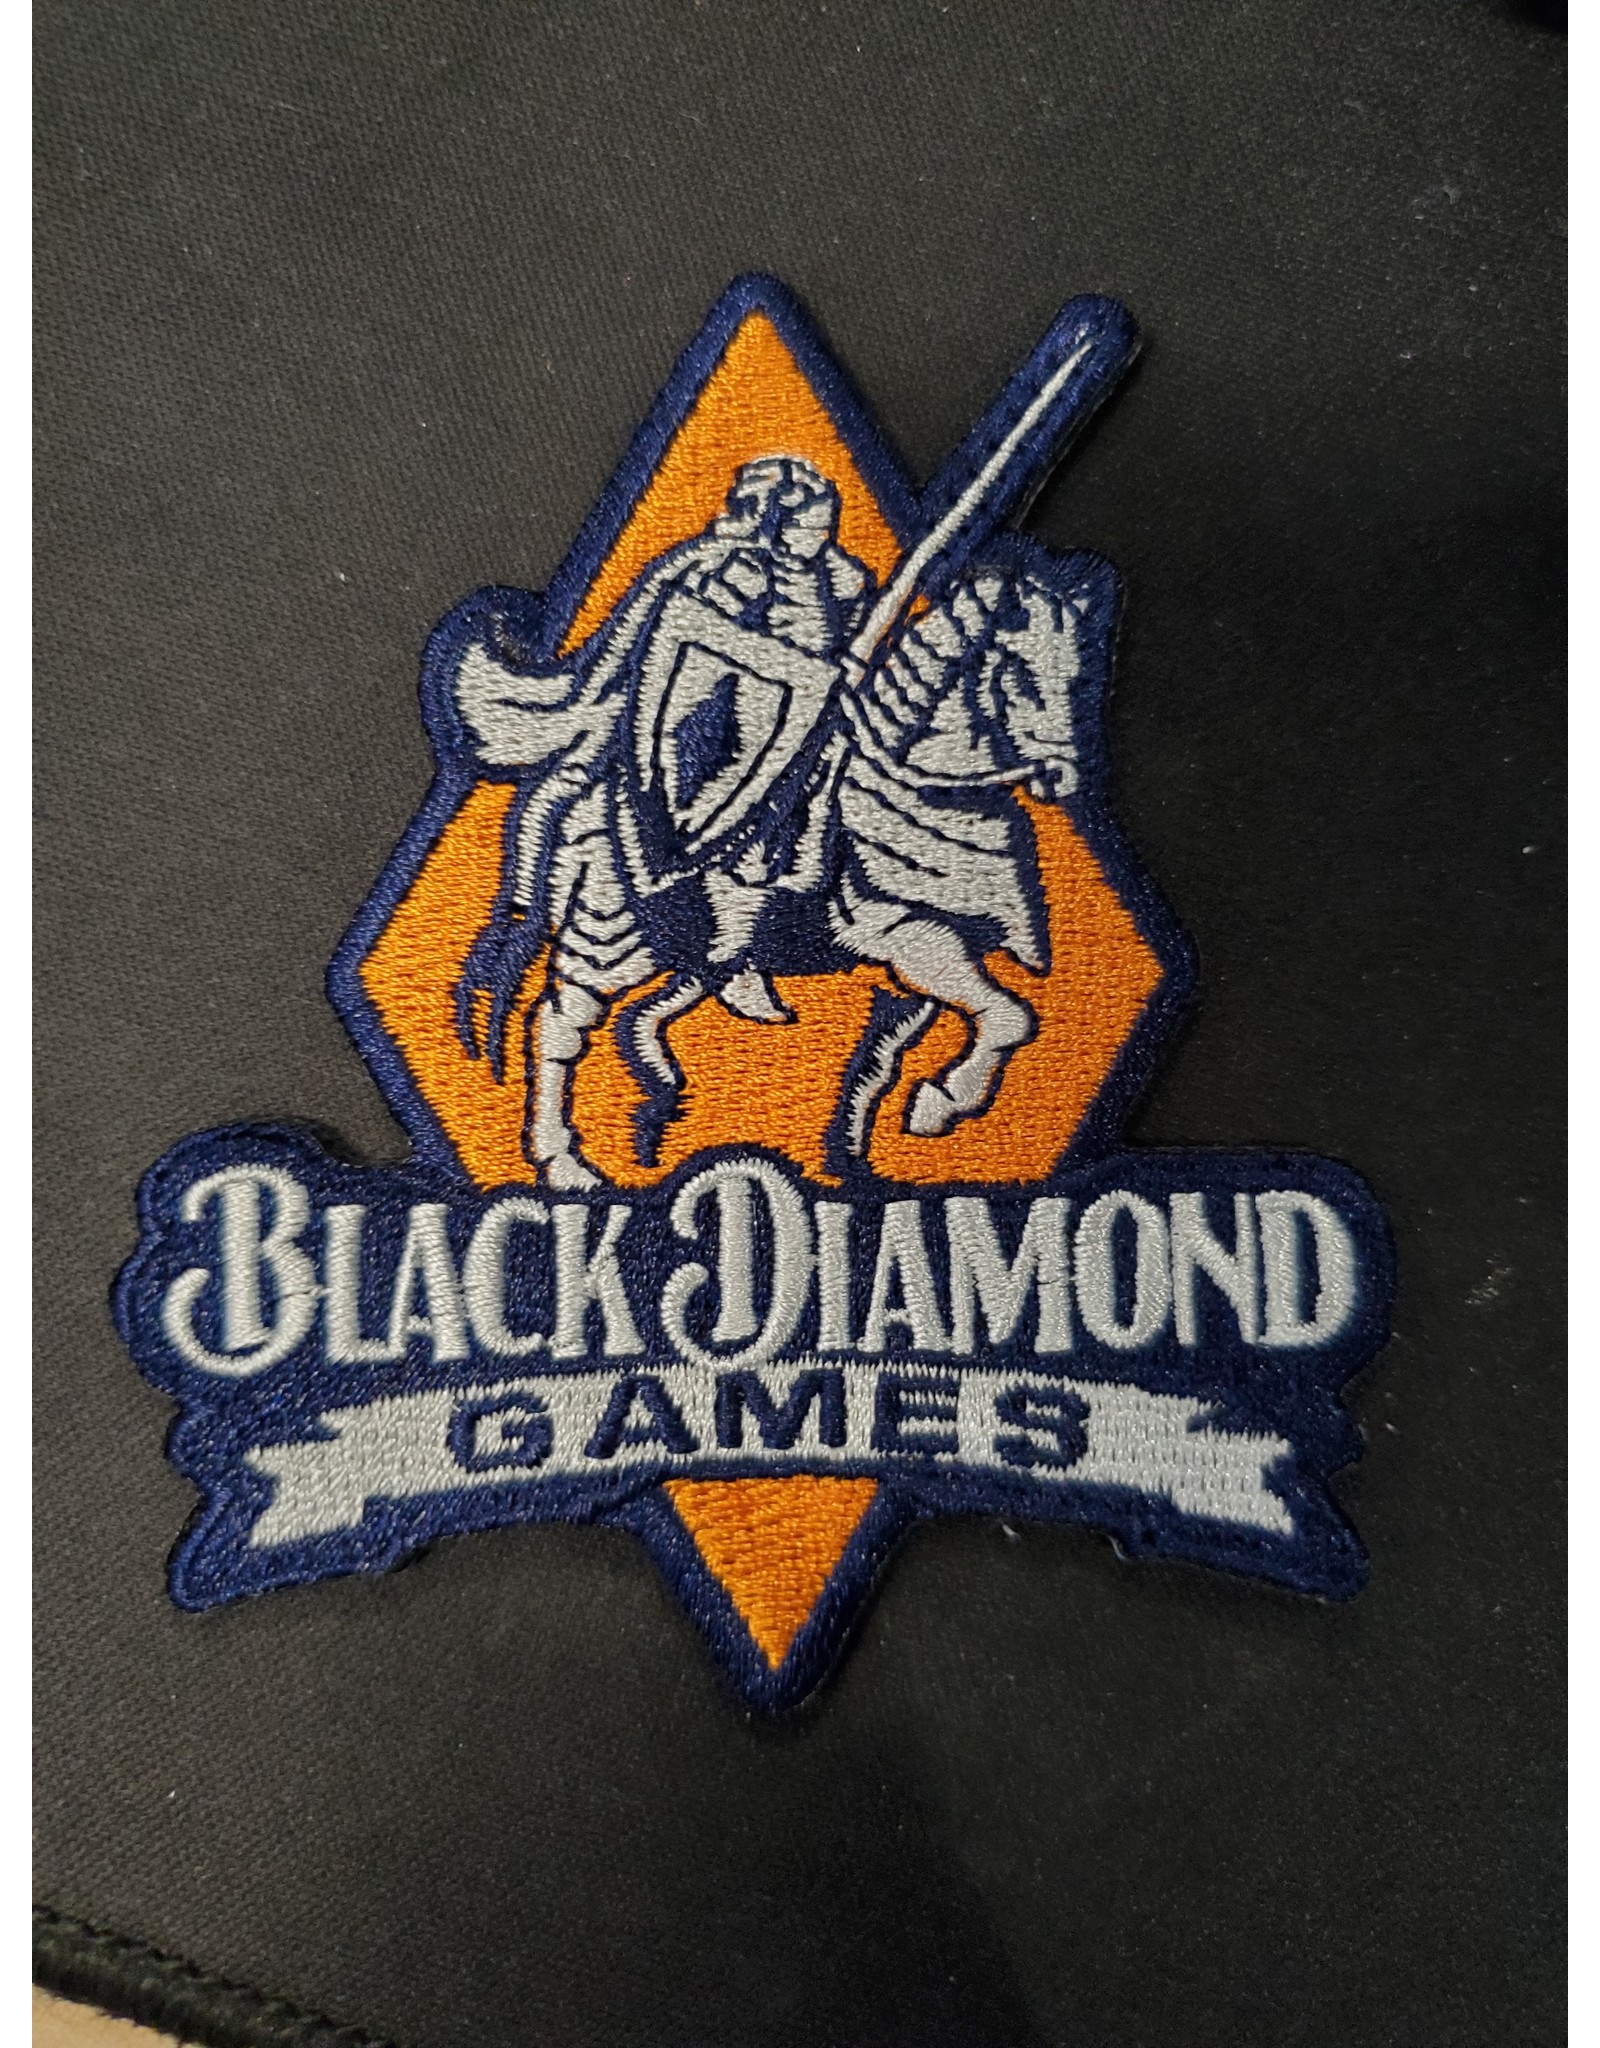 Black Diamond Games Patch